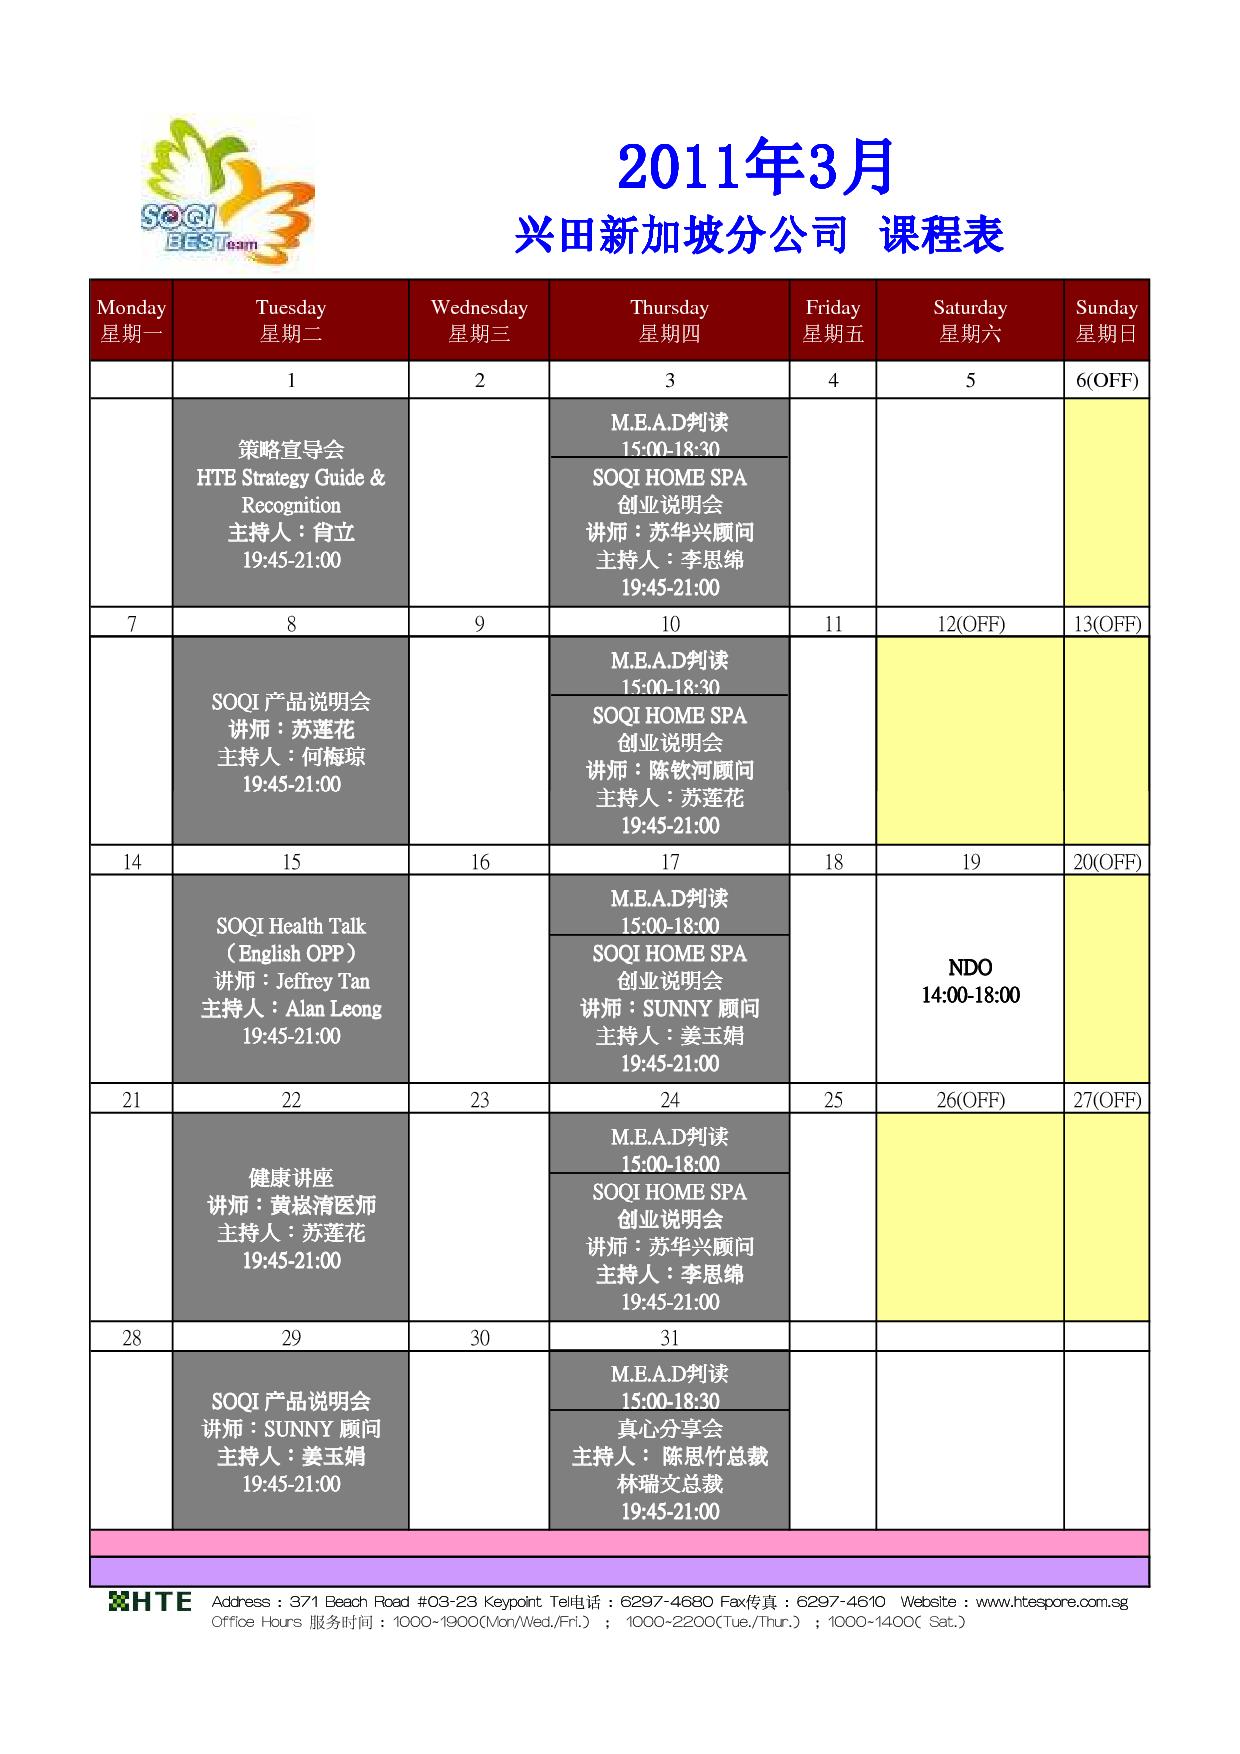 Singaopore 2011 March Schedule